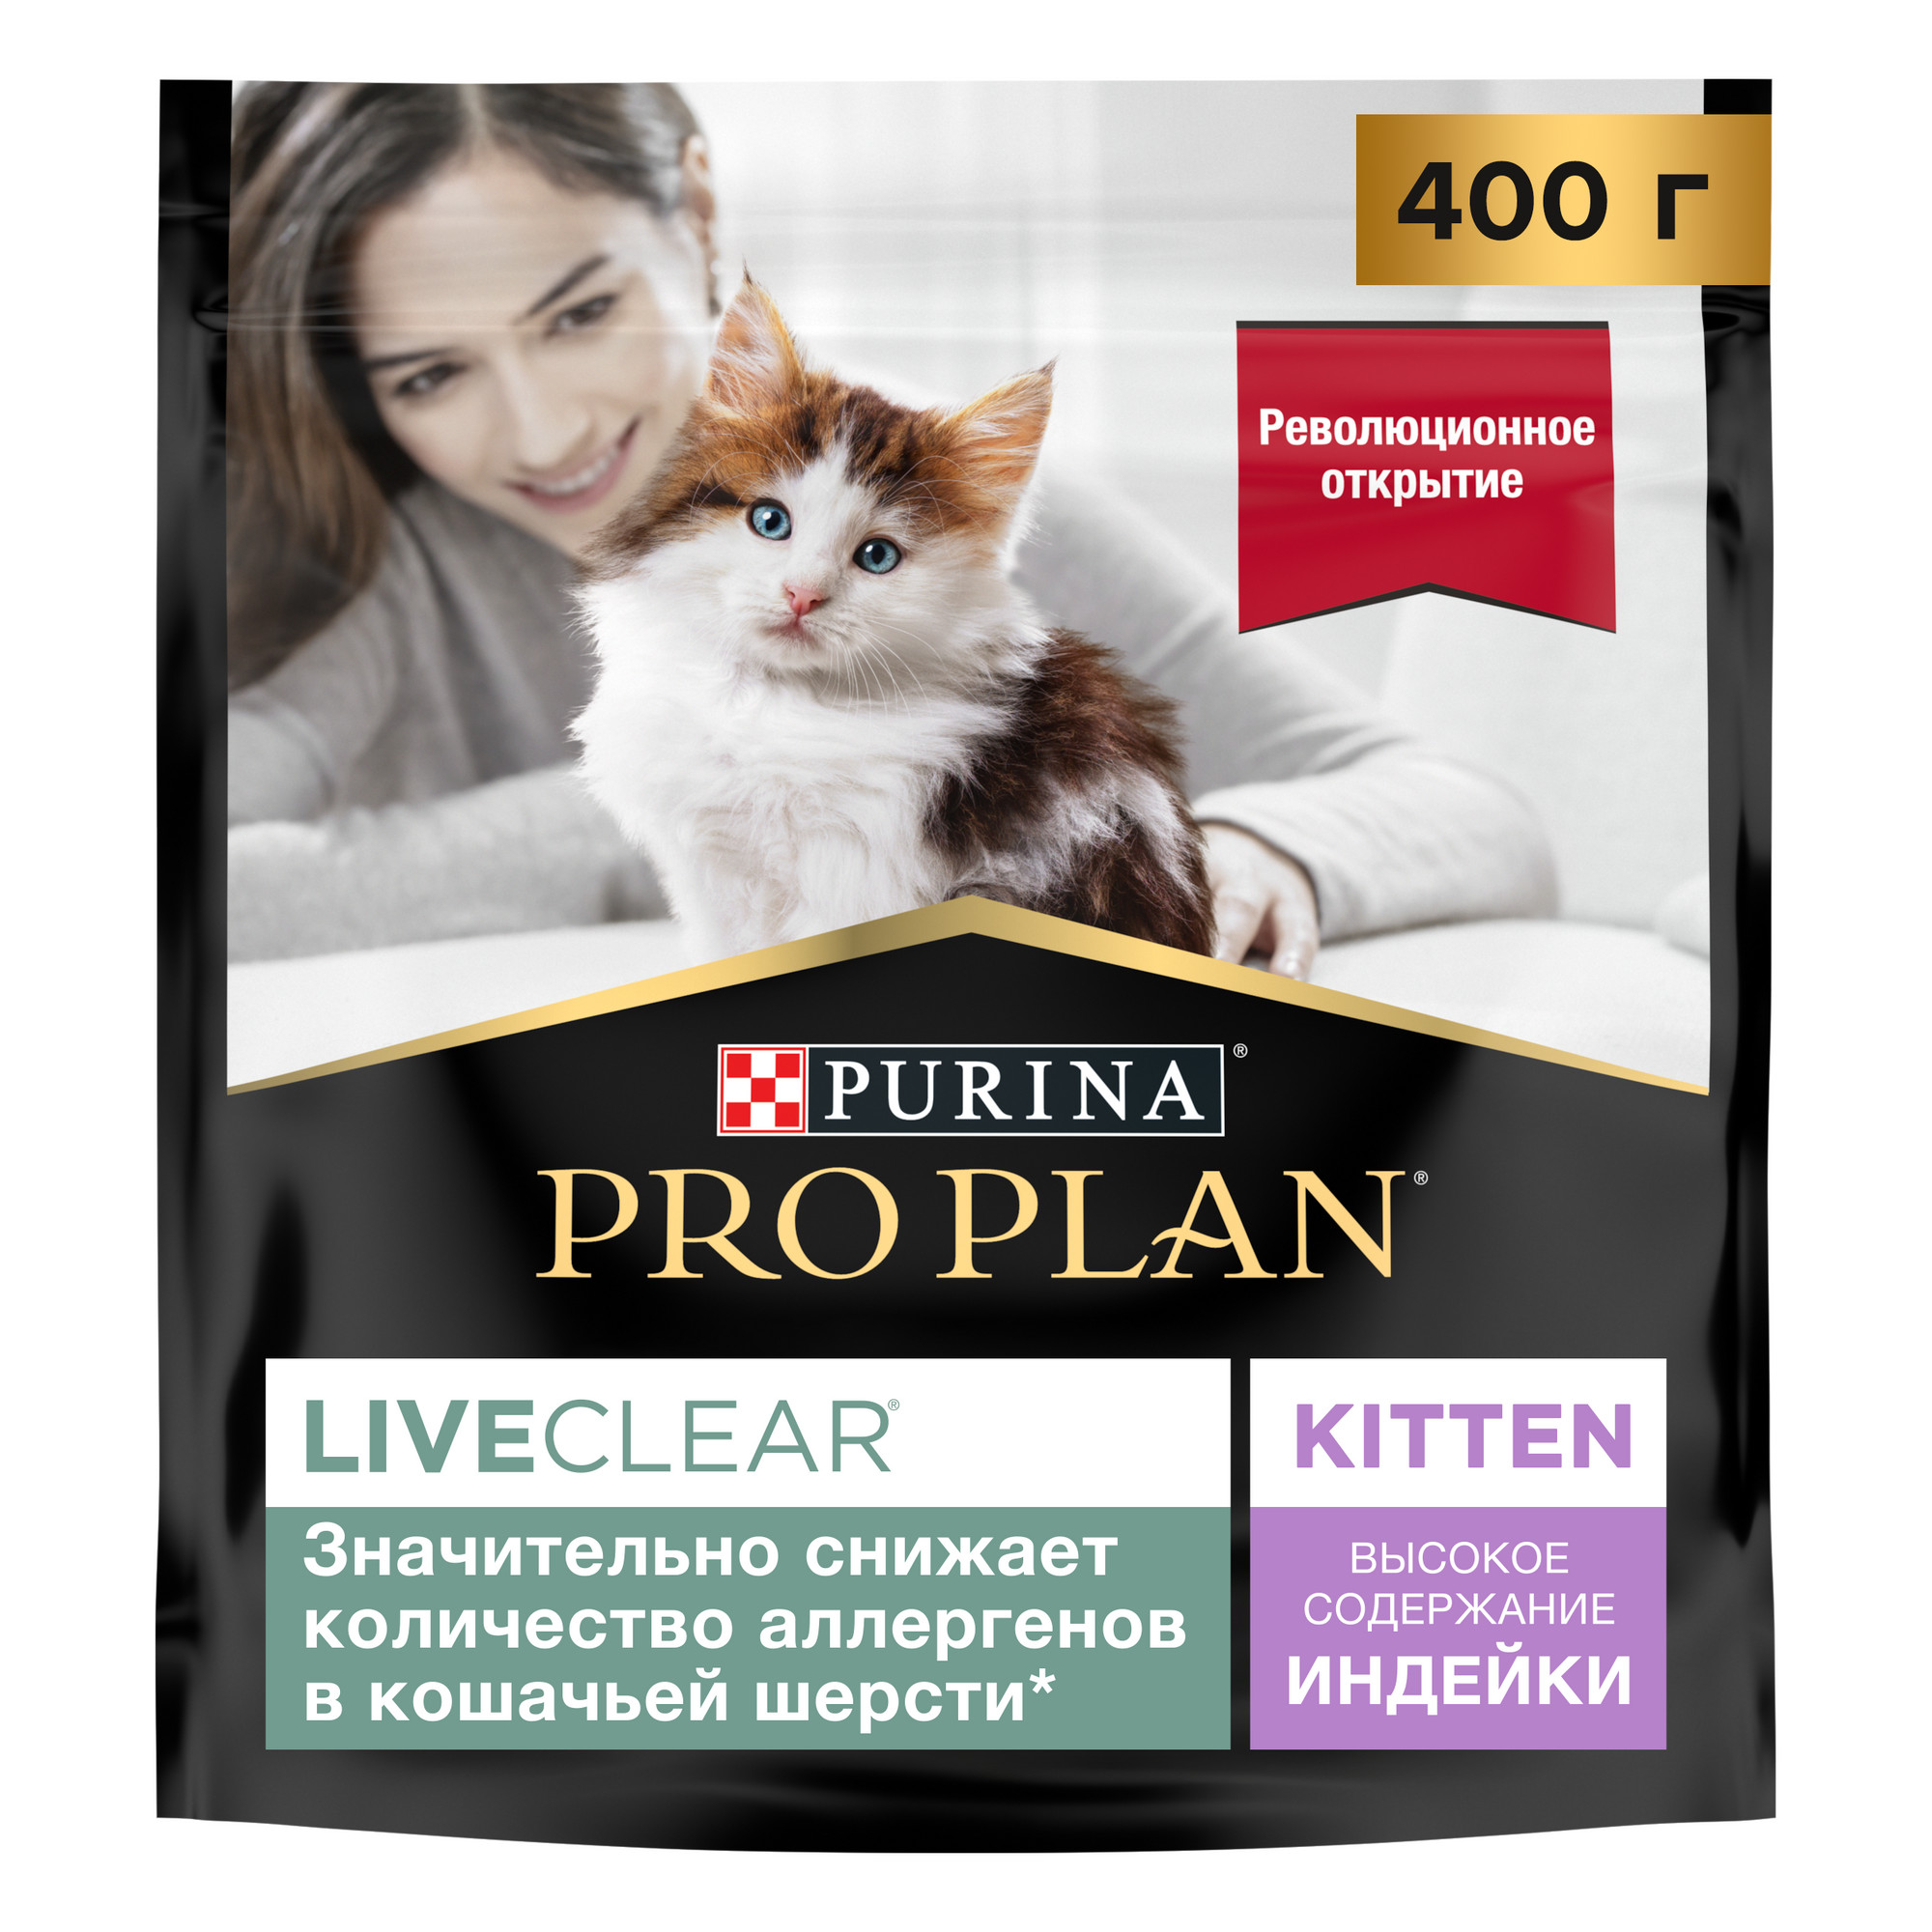 Корм purina pro plan liveclear. Корм для кошек Pro Plan liveclear. Корм для снижения количество аллергенов в кошачьей шерсти. Корм снижающий количество аллергенов в шерсти у кошек. Корм Pro Plan liveclear купить.